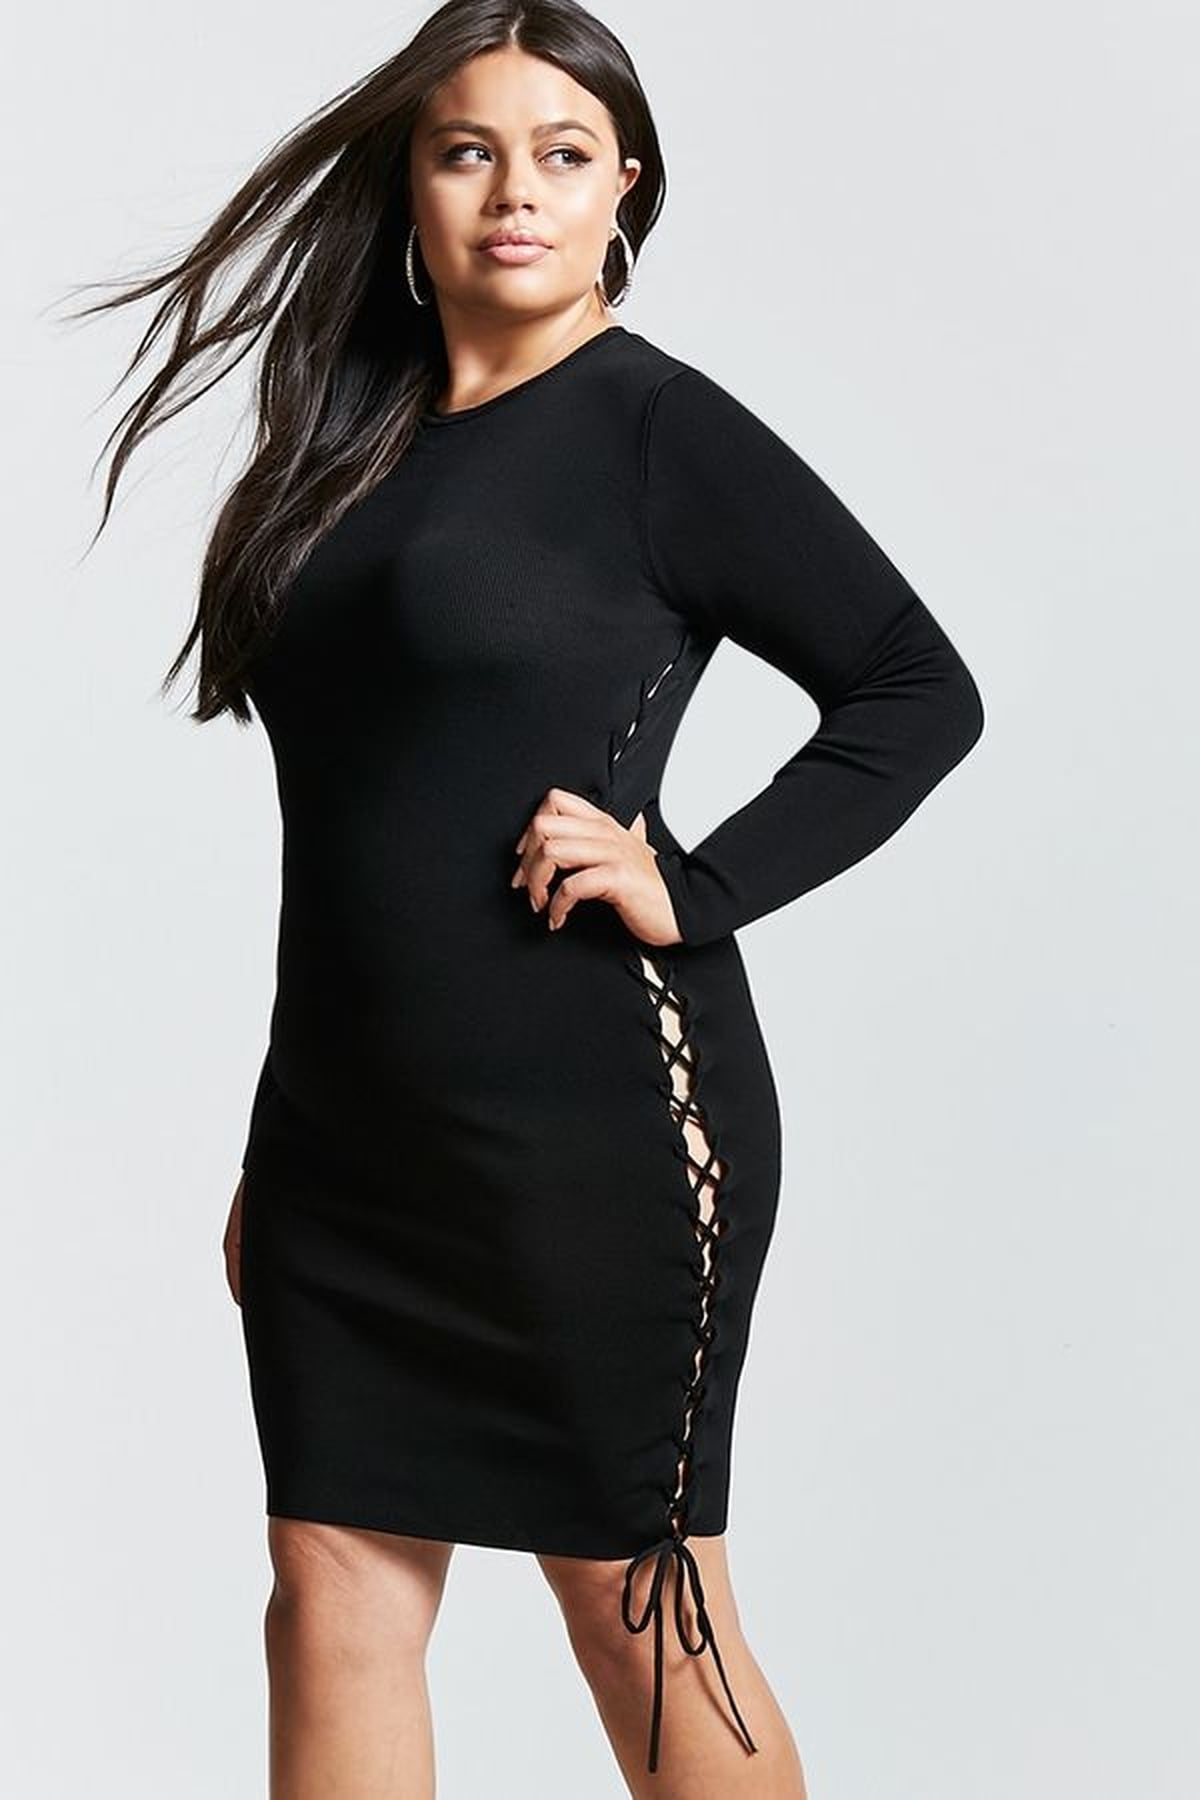 Bella Hadid Black Lace-Up Dress | POPSUGAR Fashion